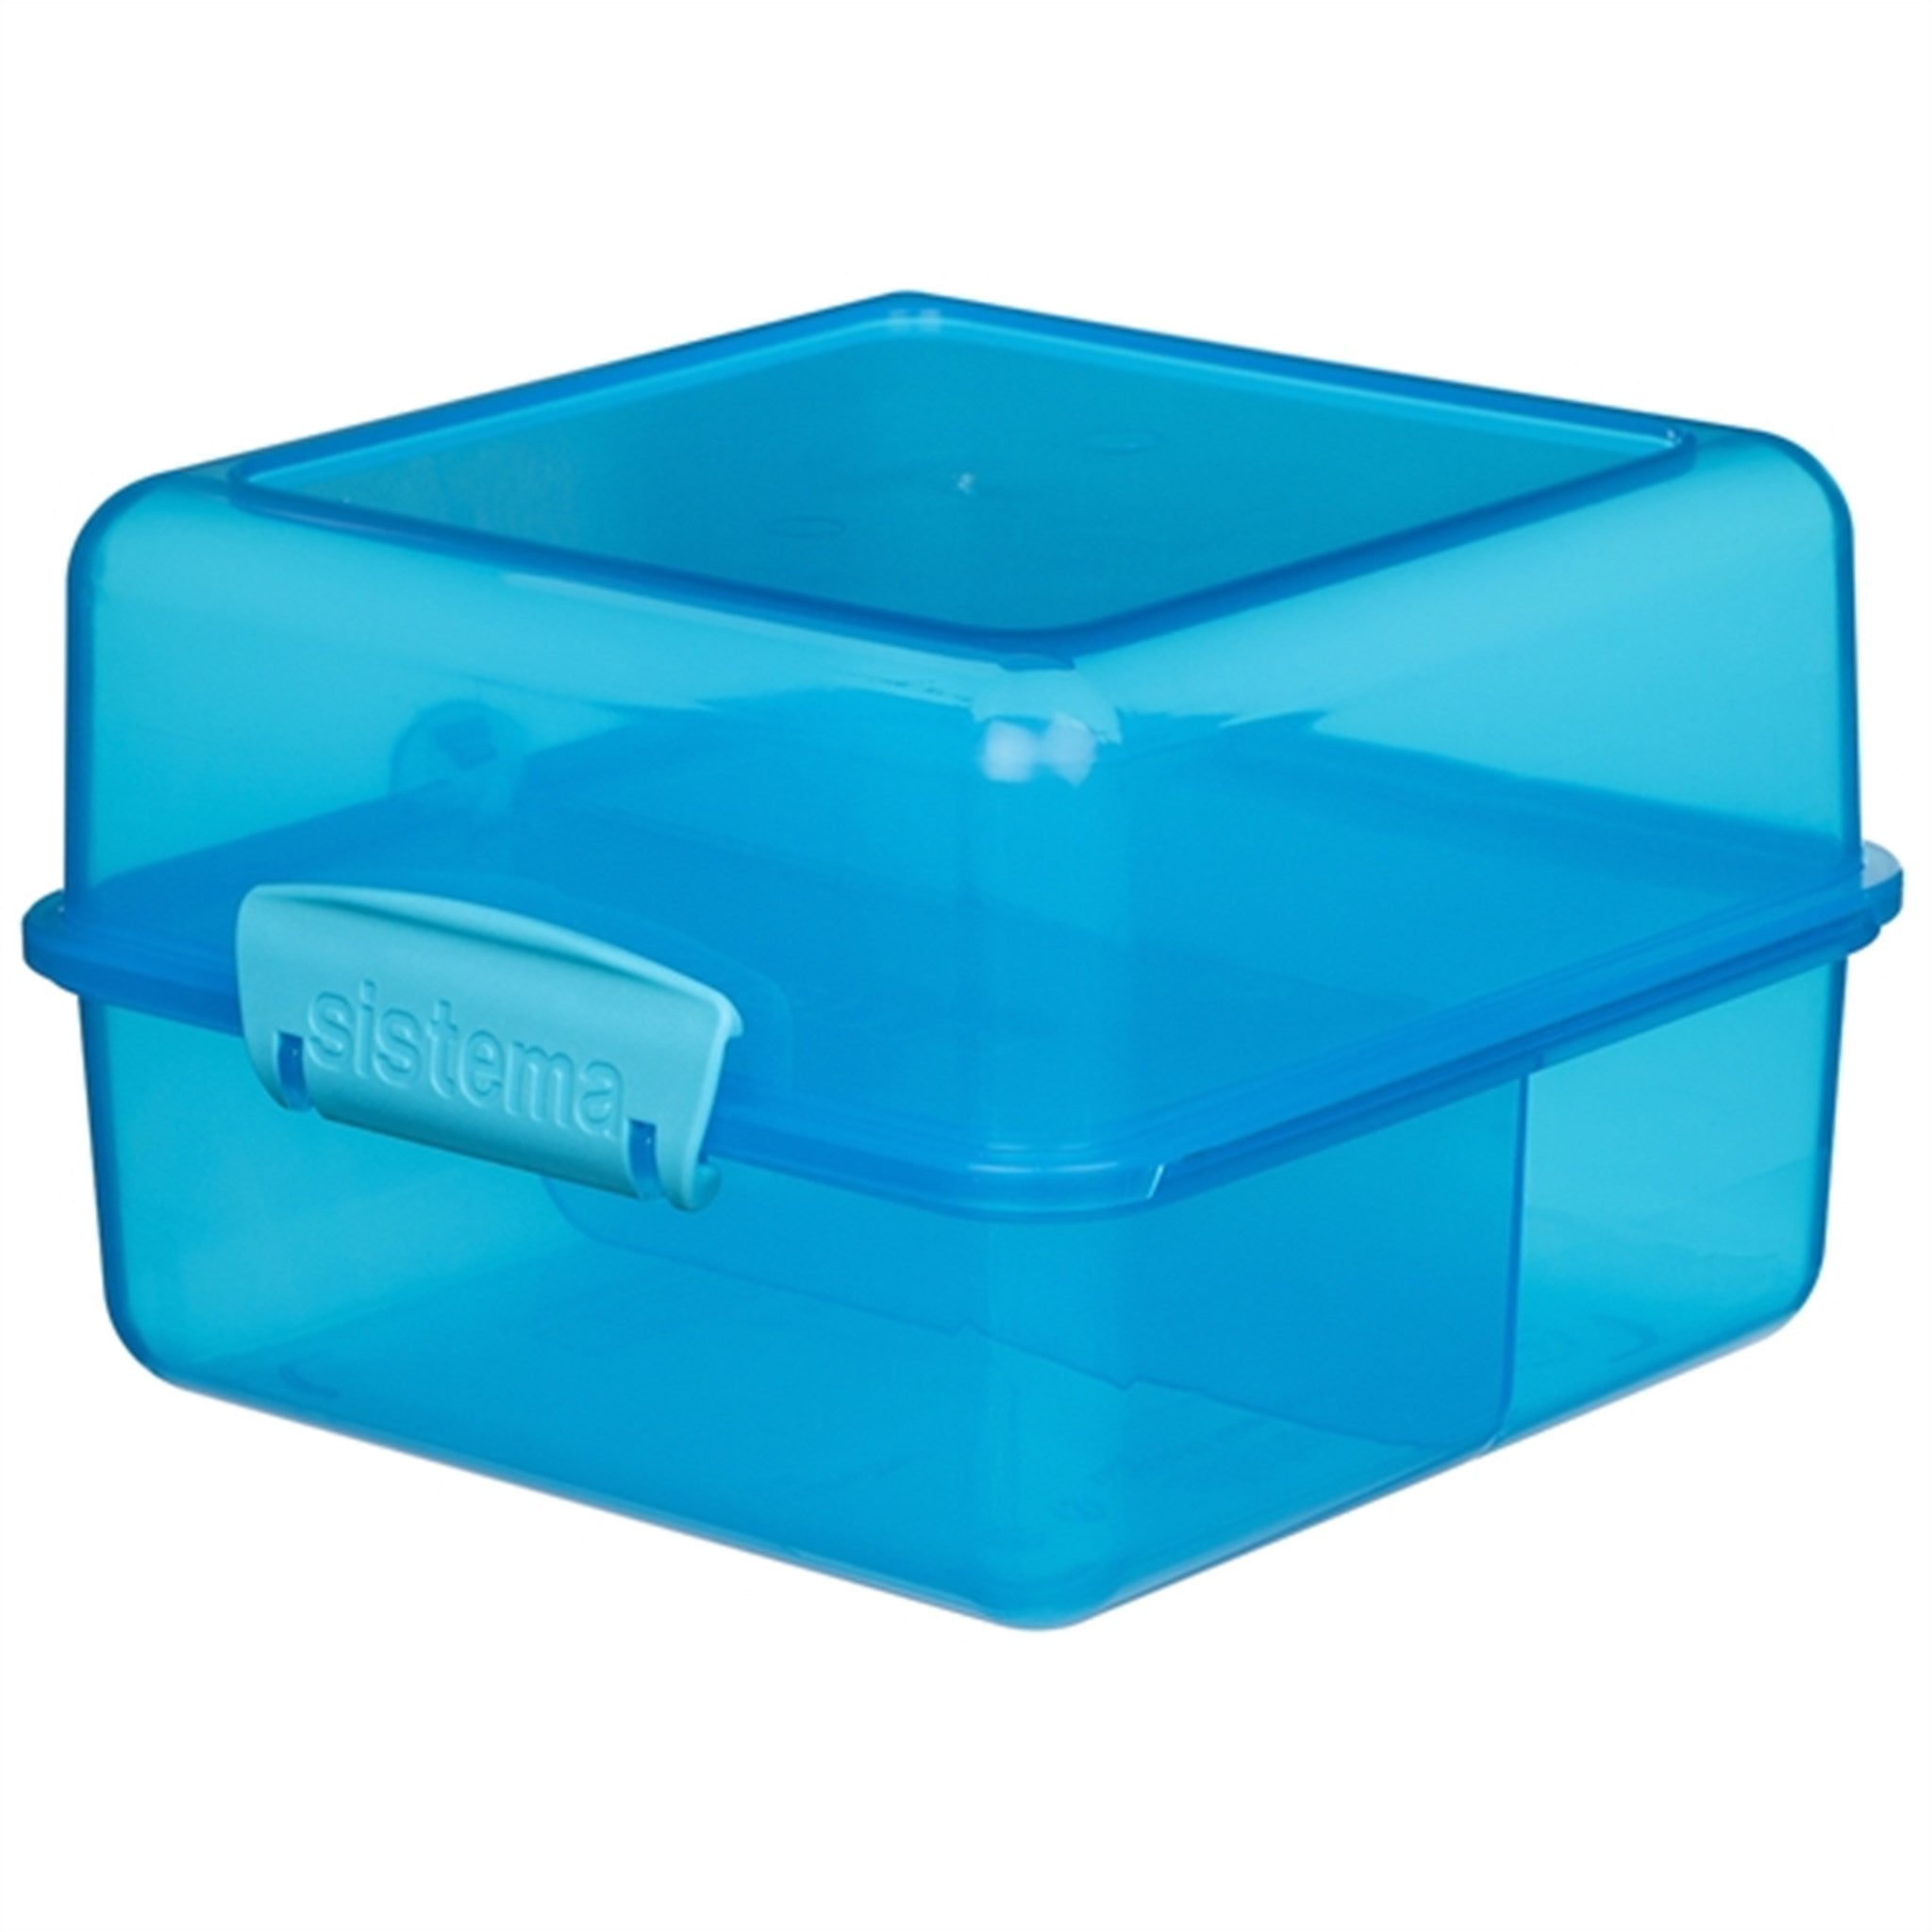 Sistema Lunch Cube Lunch Box 1,4 L Blue